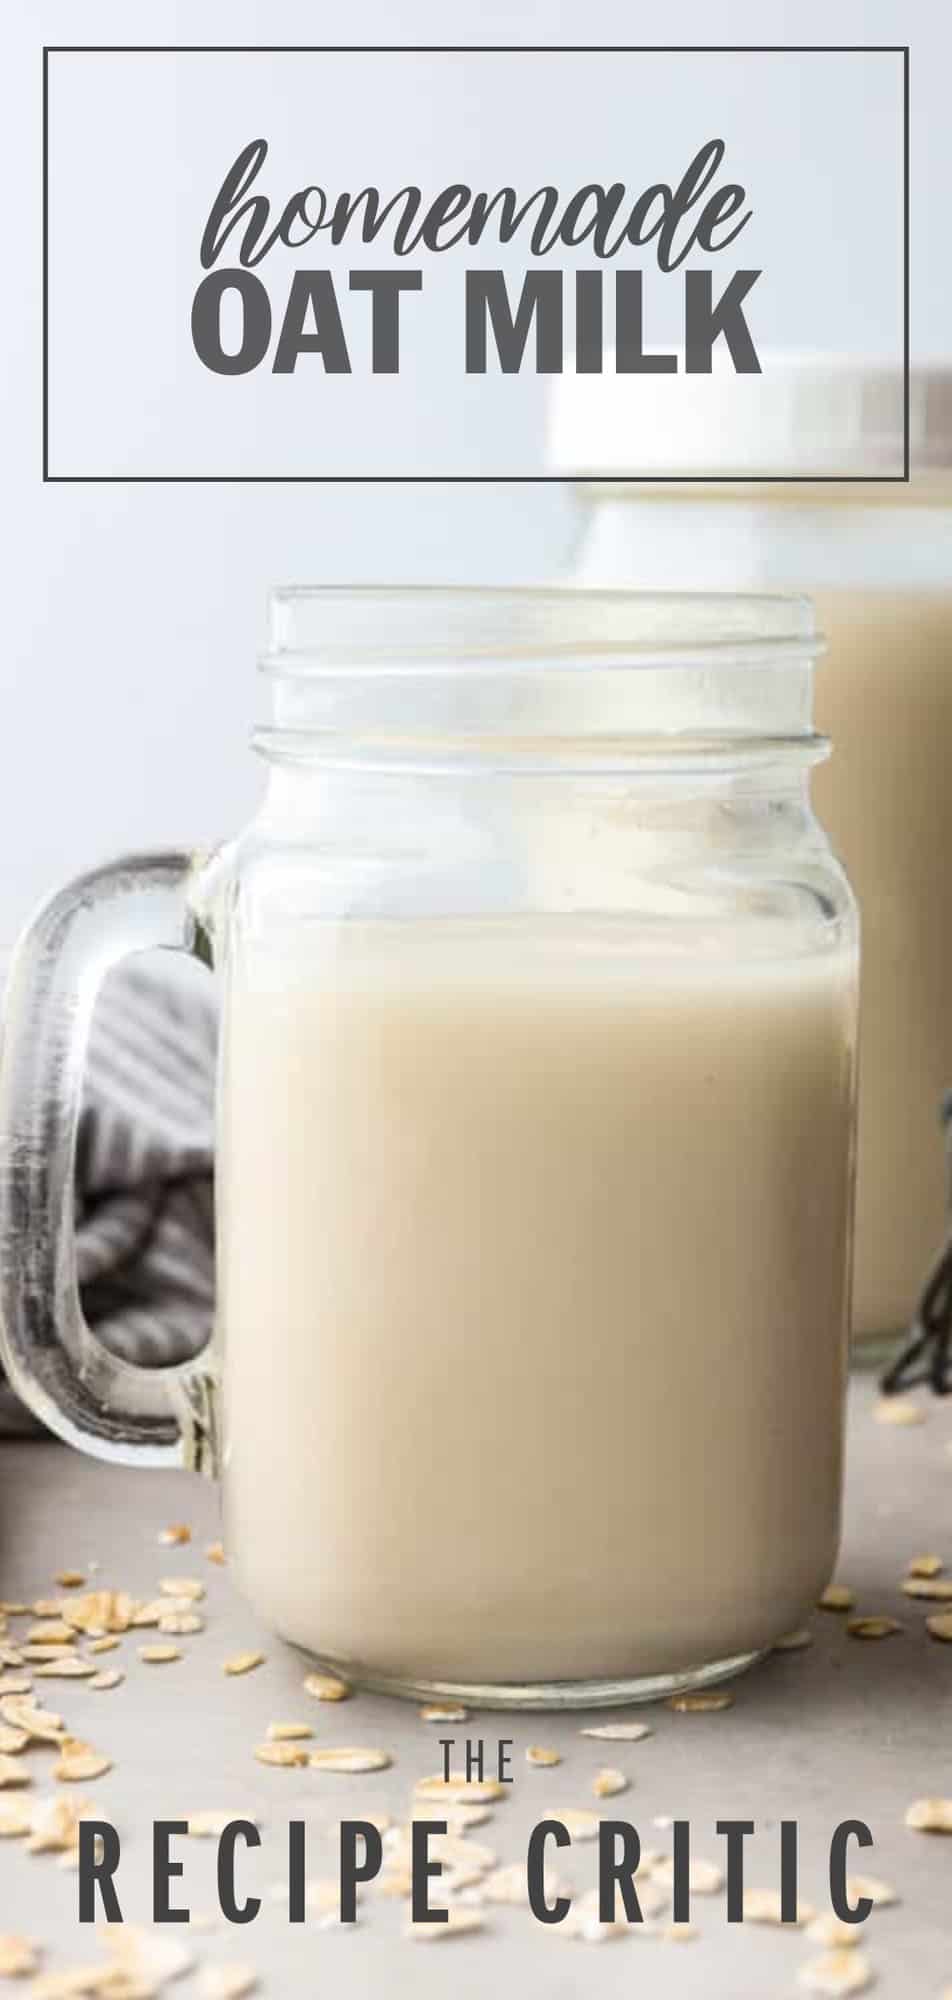 How to Make Oat Milk | Media 1 96890FC4 FF68 45C8 A130 27CBA71C6CE4